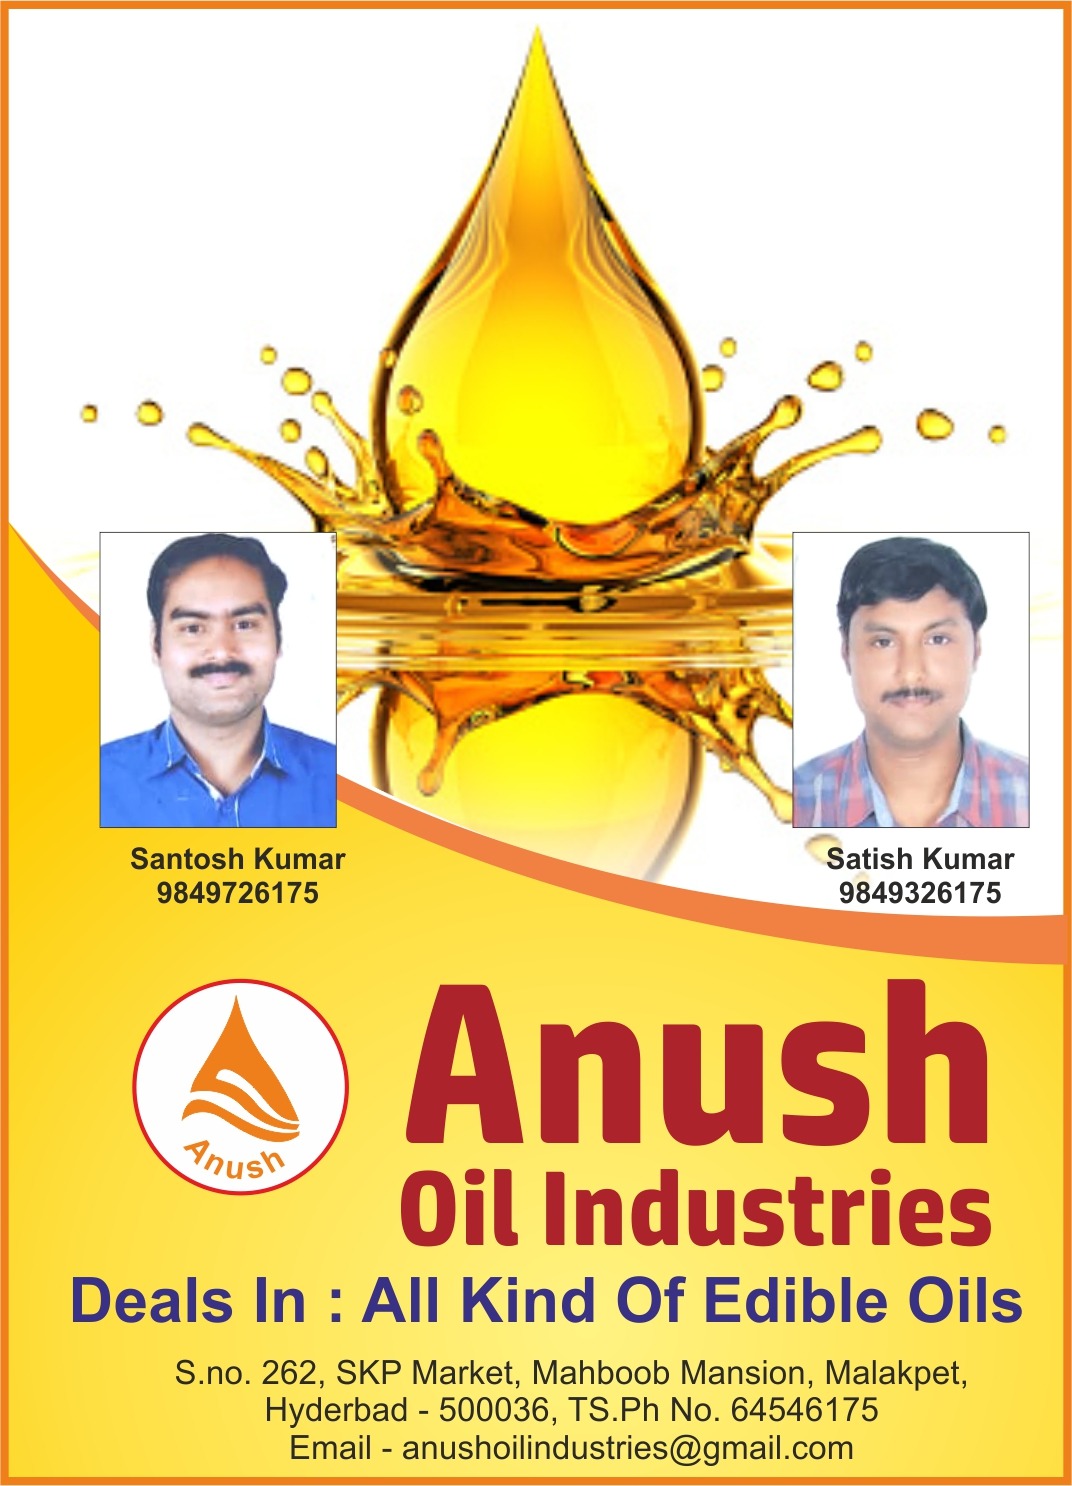 Anush Oil Industries